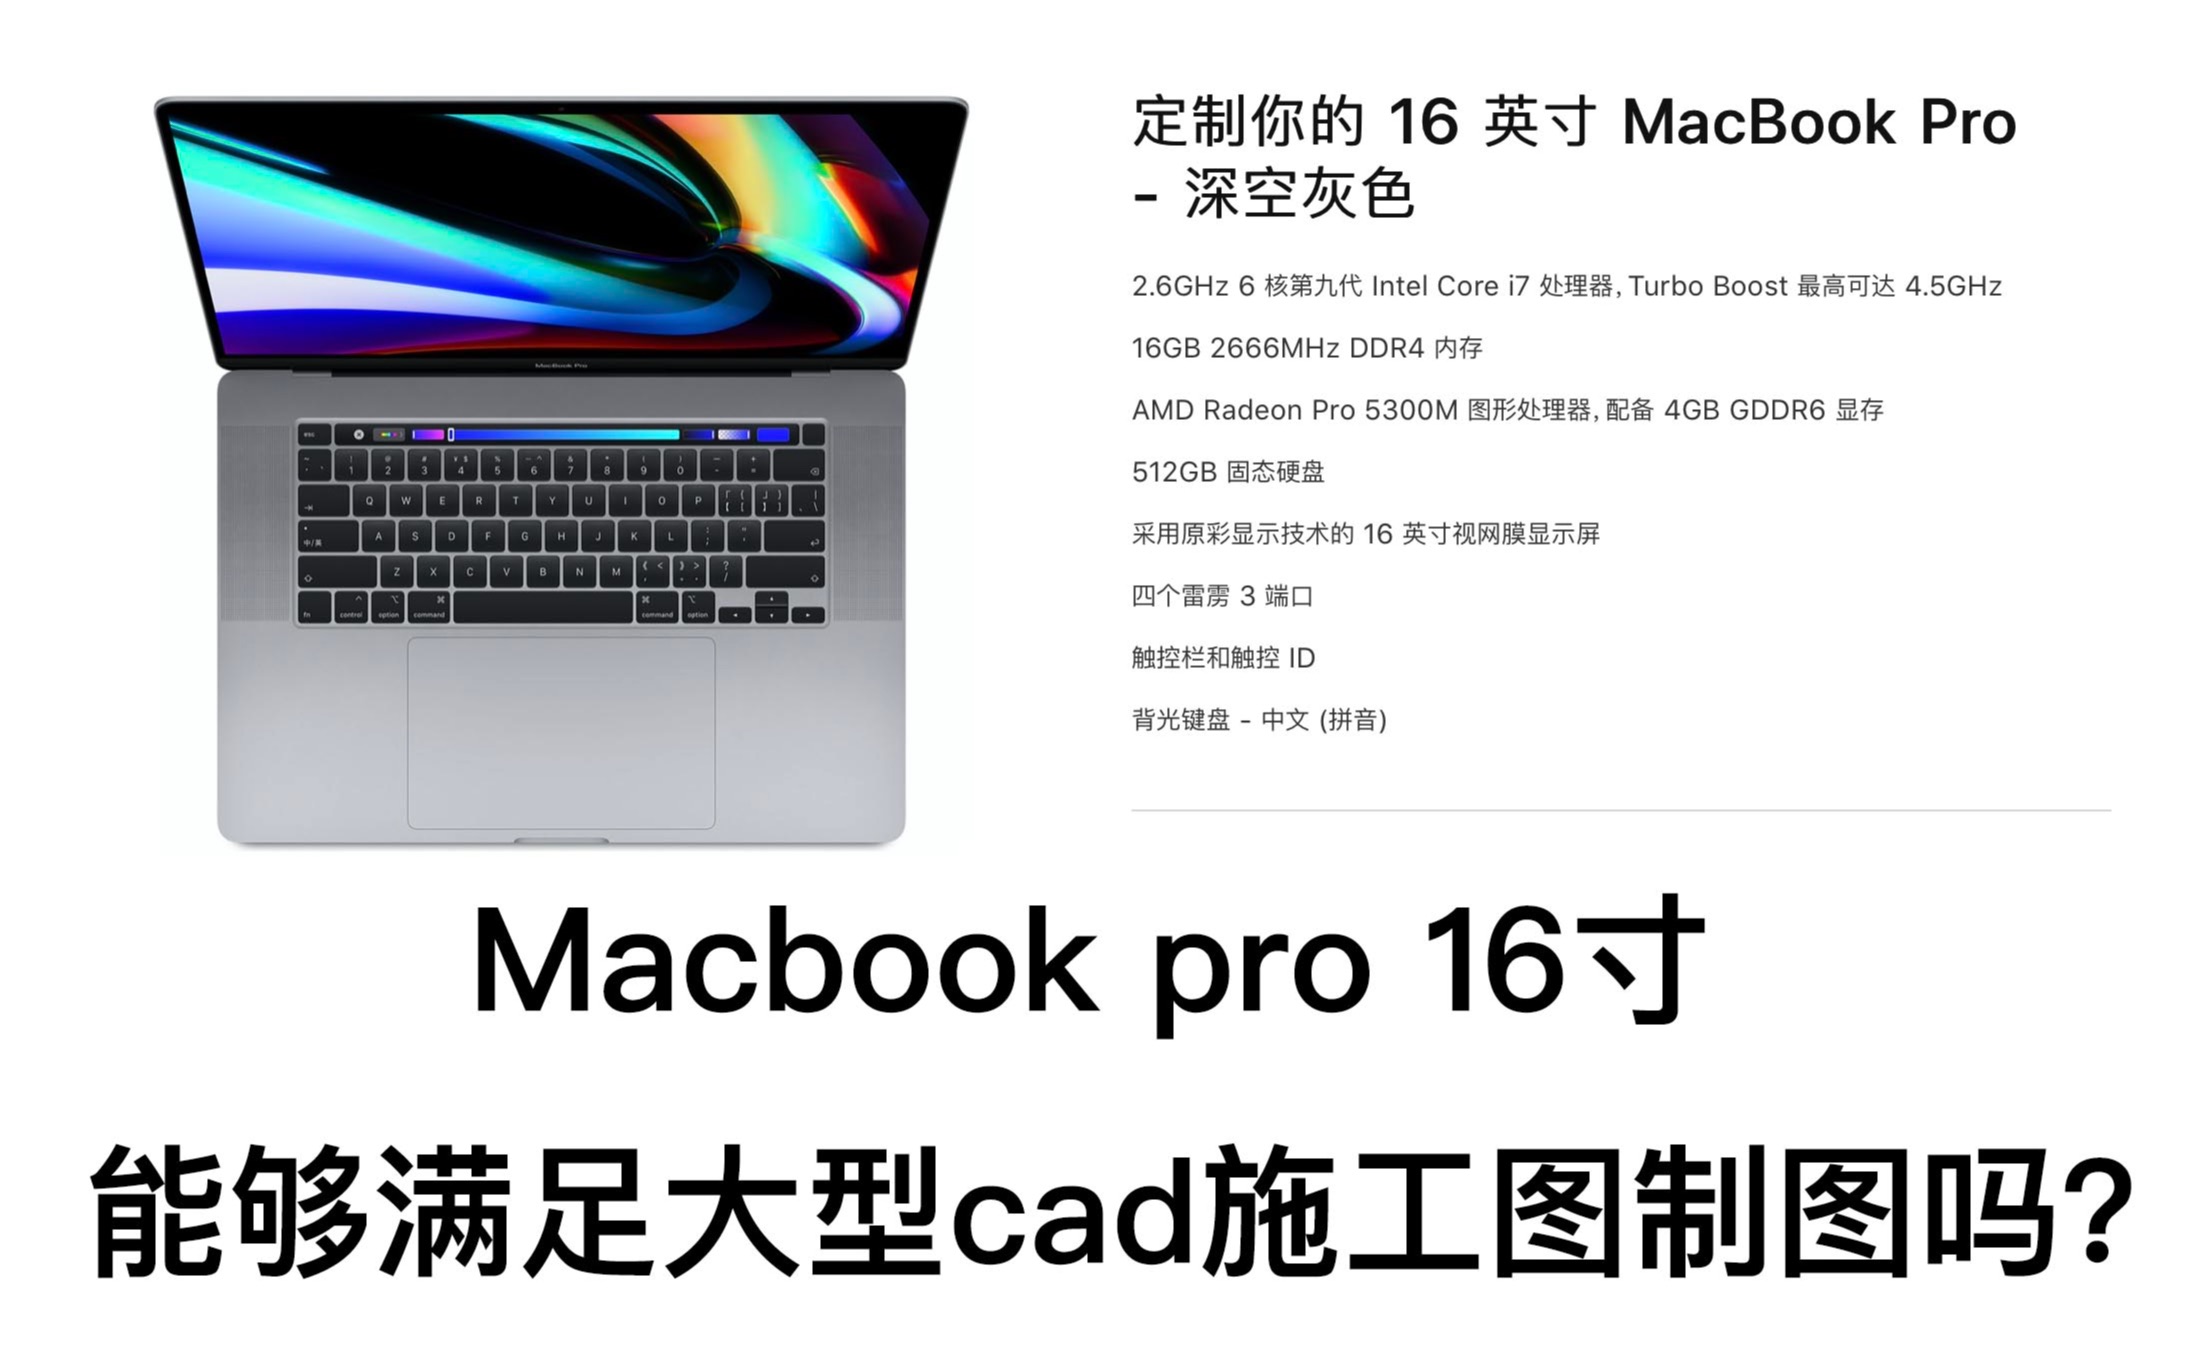 macbook pro autocad